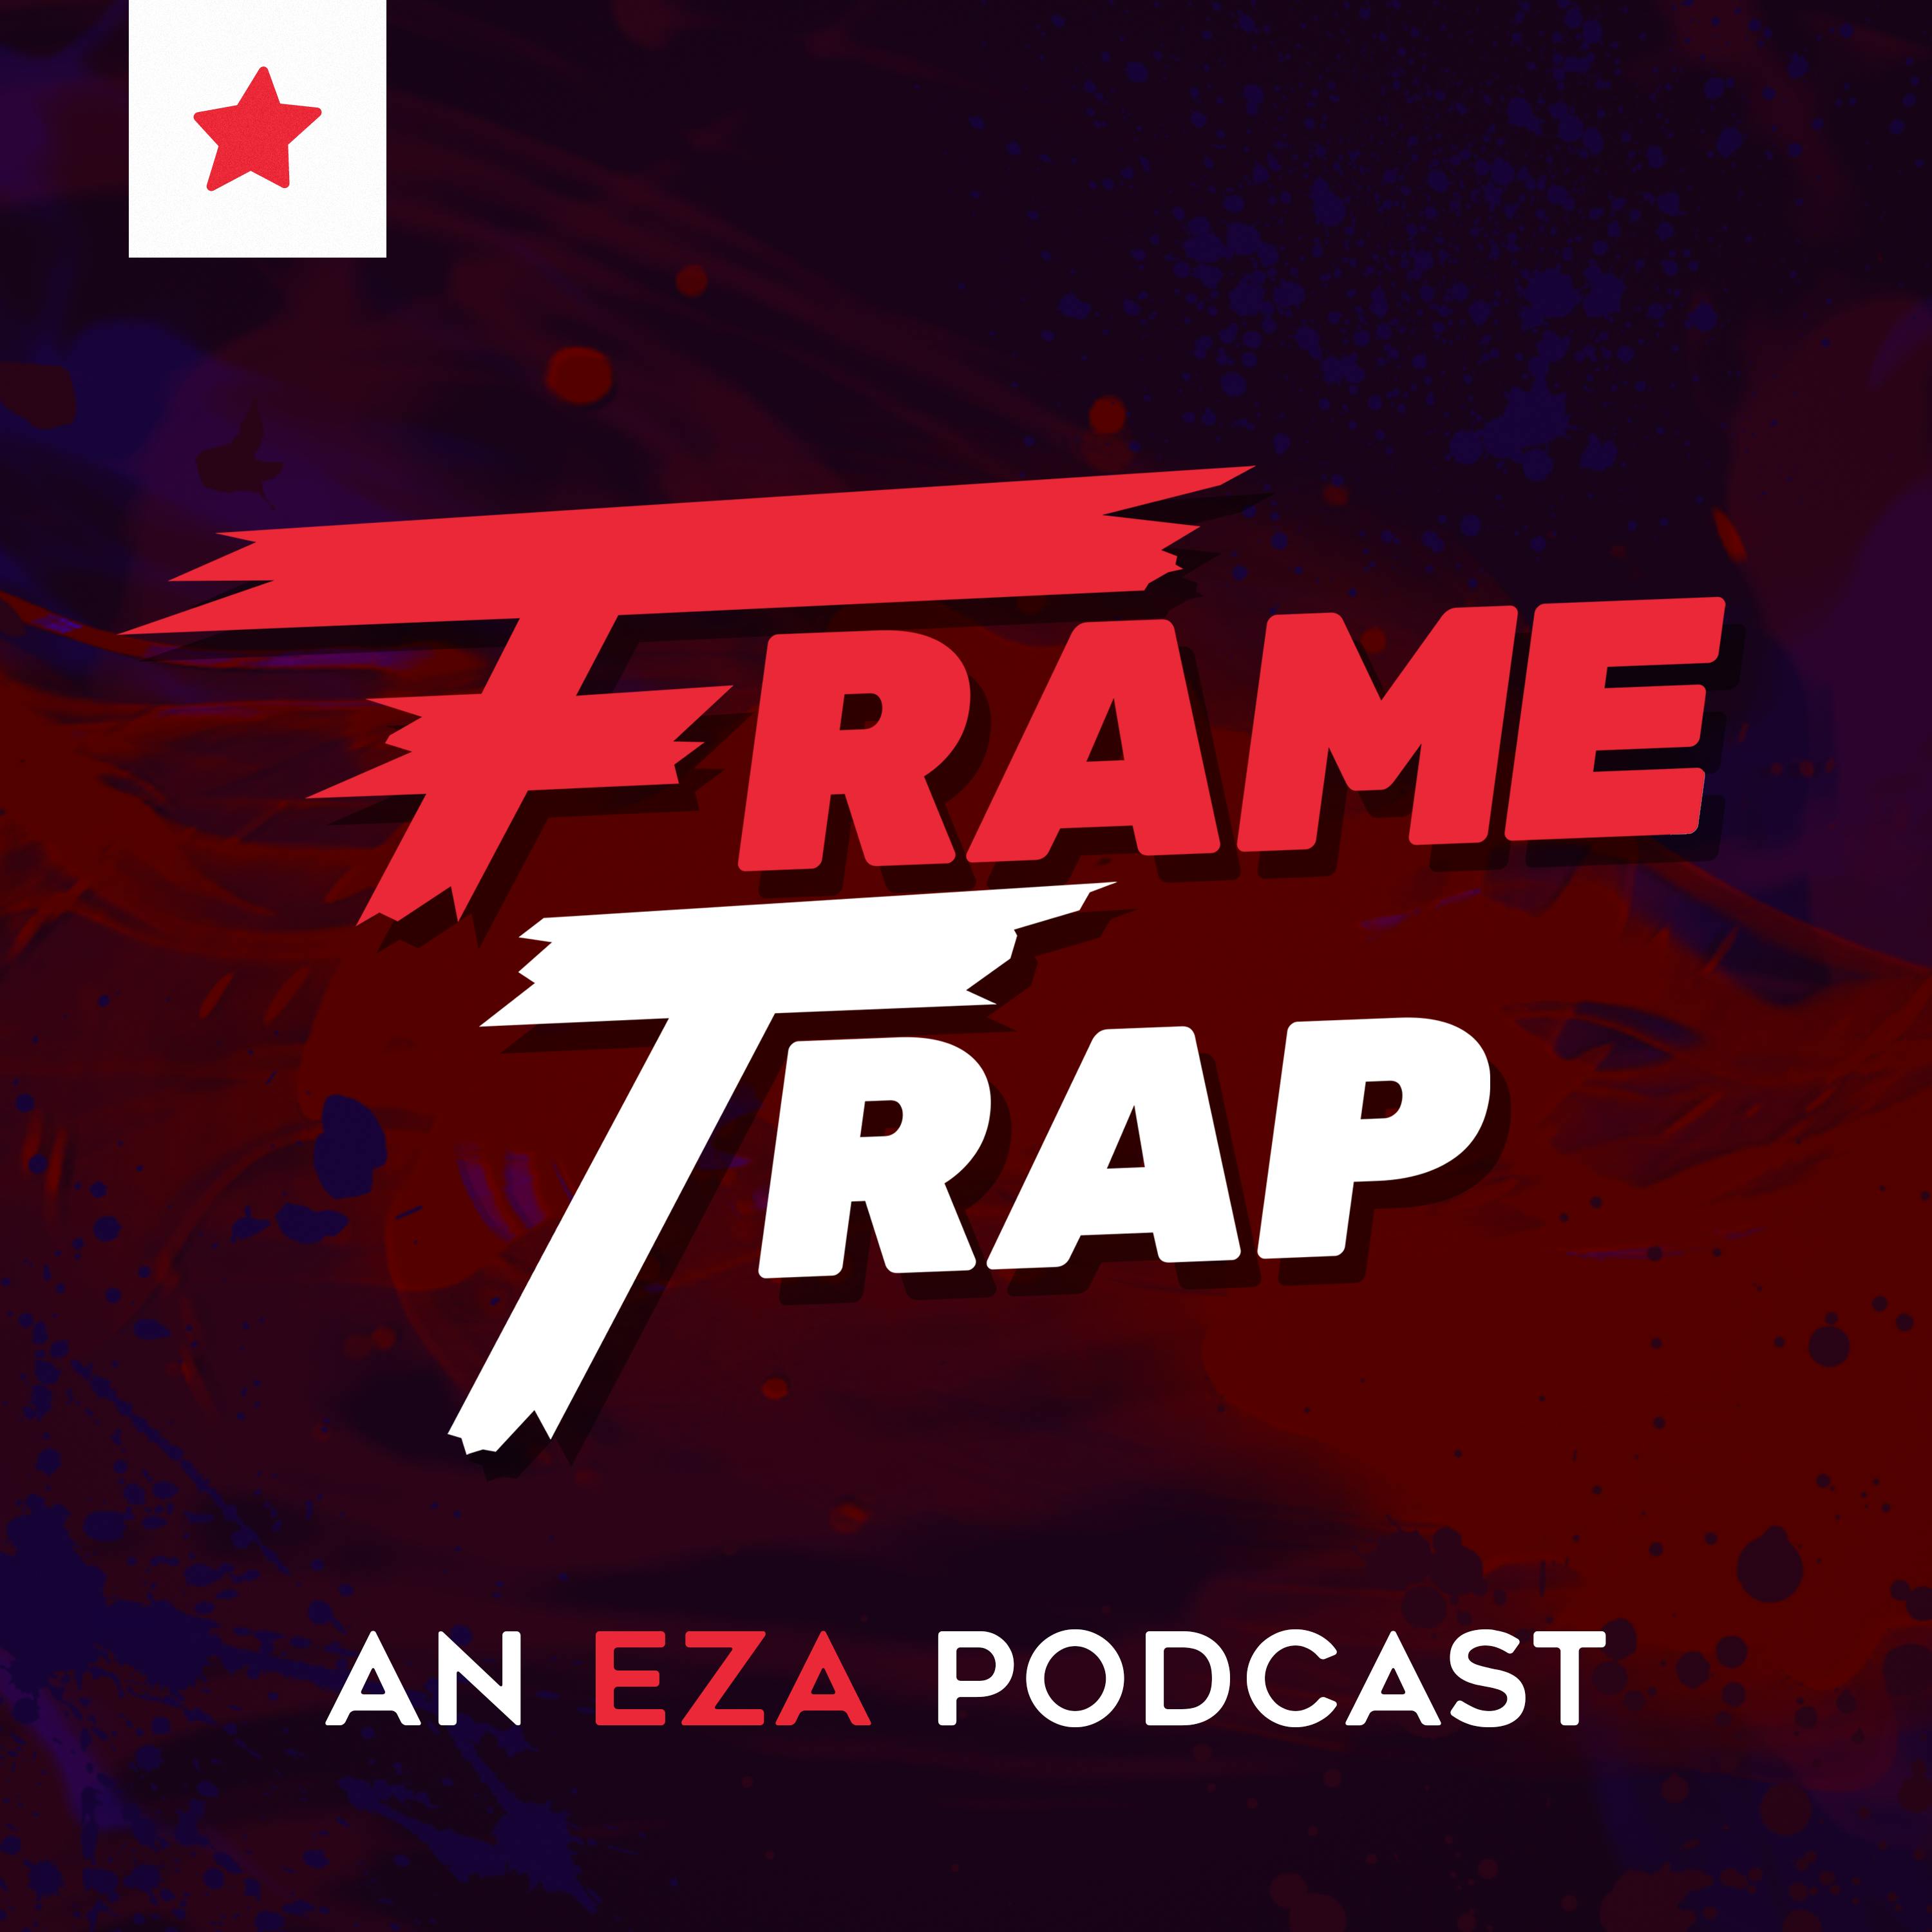 Frame Trap - Episode 176 